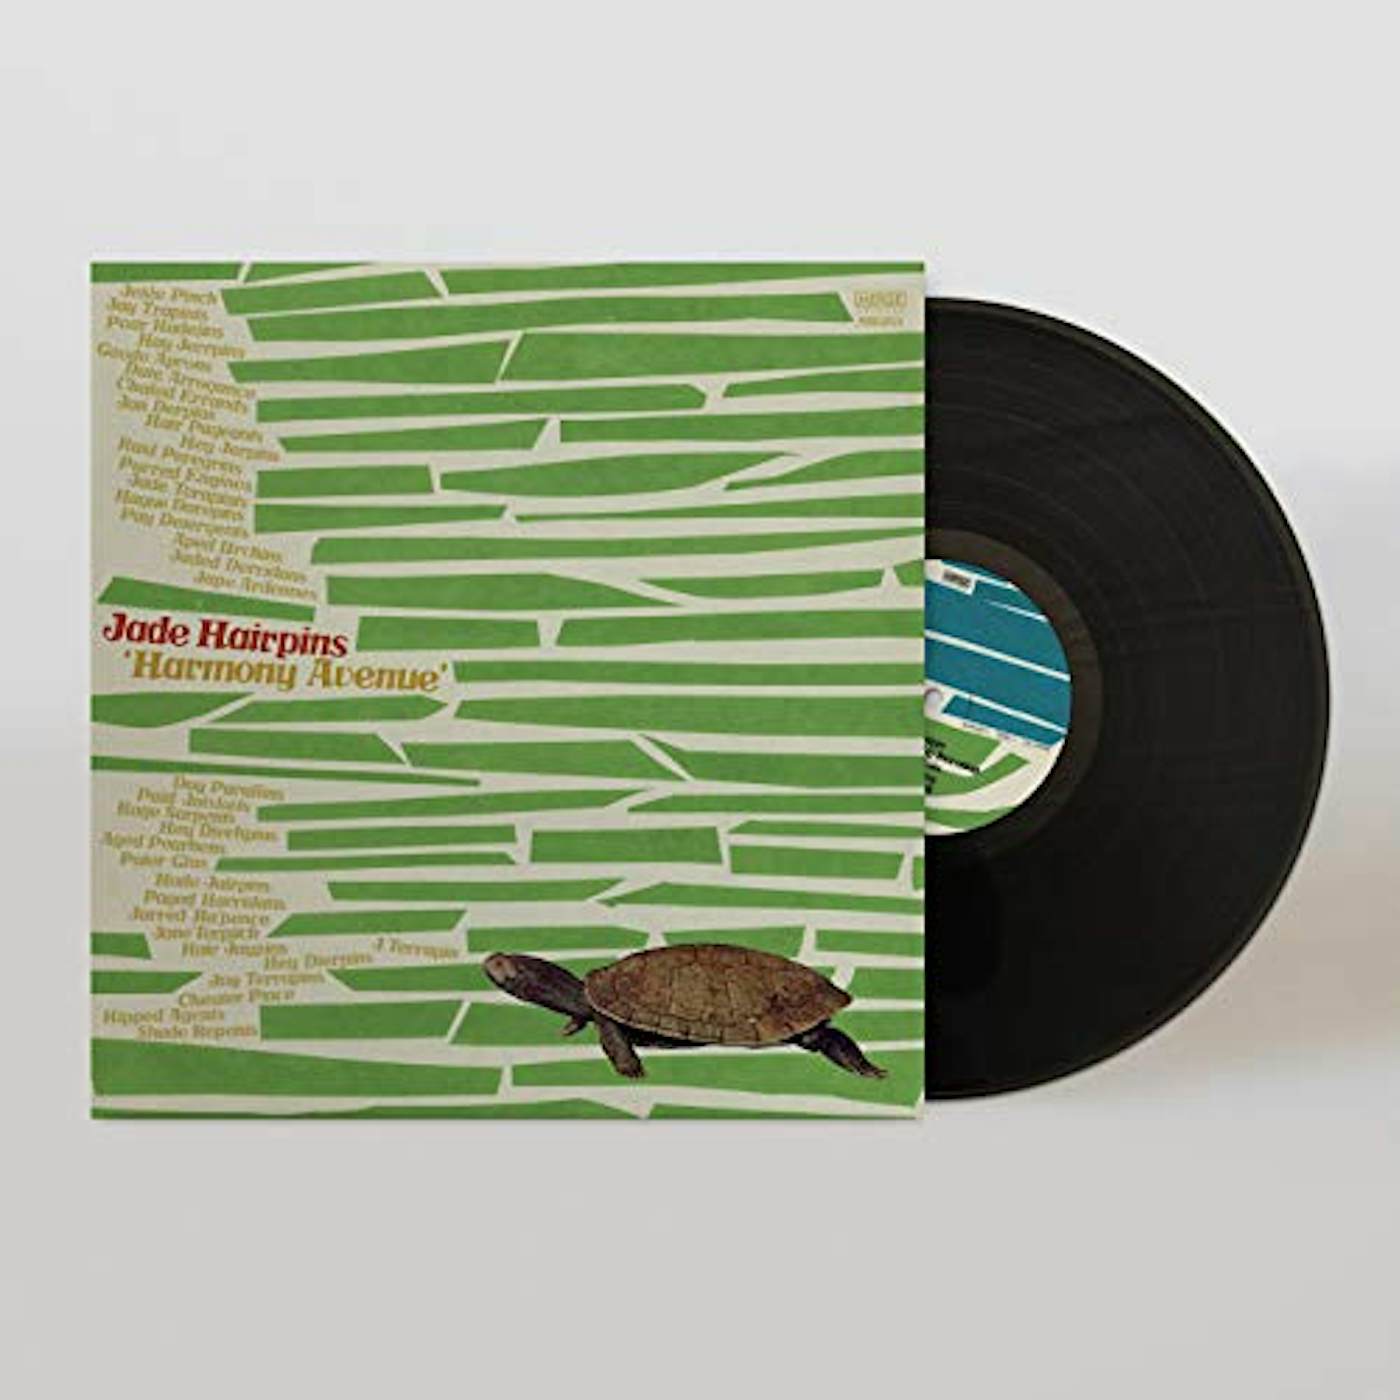 Jade Hairpins Harmony Avenue Vinyl Record